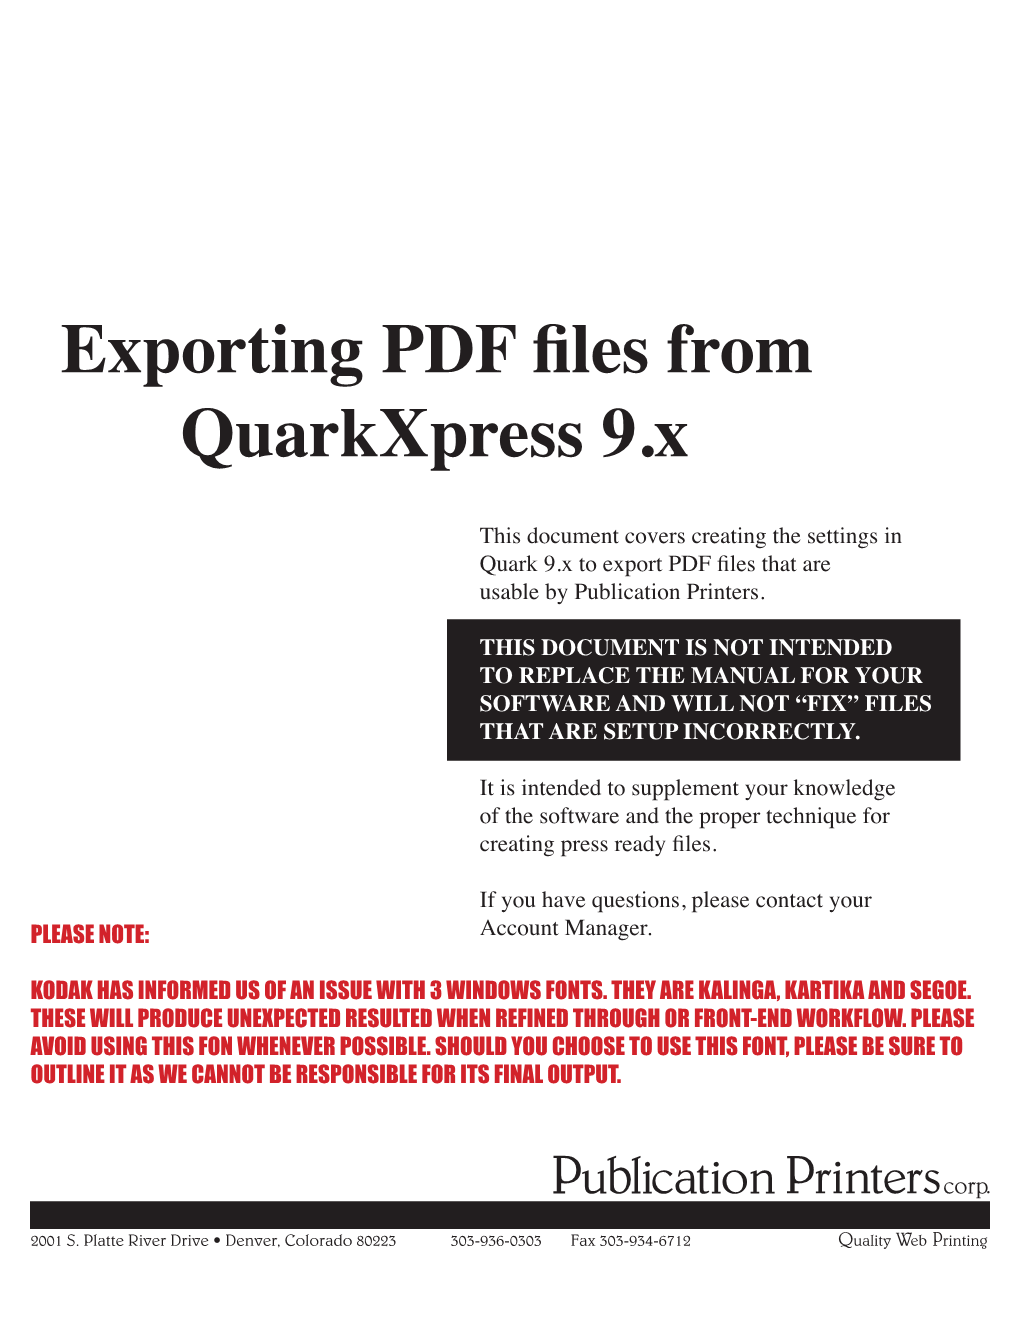 Exporting PDF Files from Quarkxpress 9.X